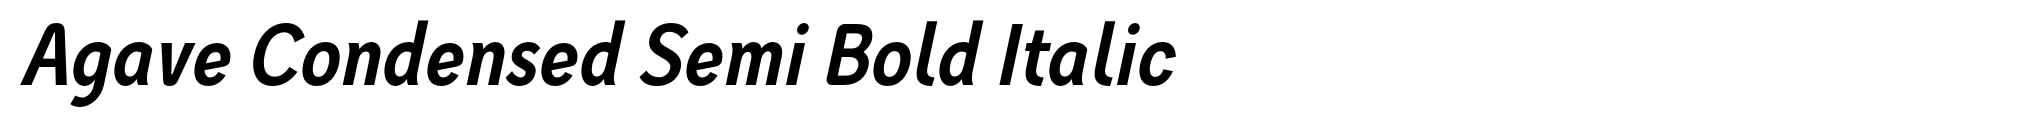 Agave Condensed Semi Bold Italic image